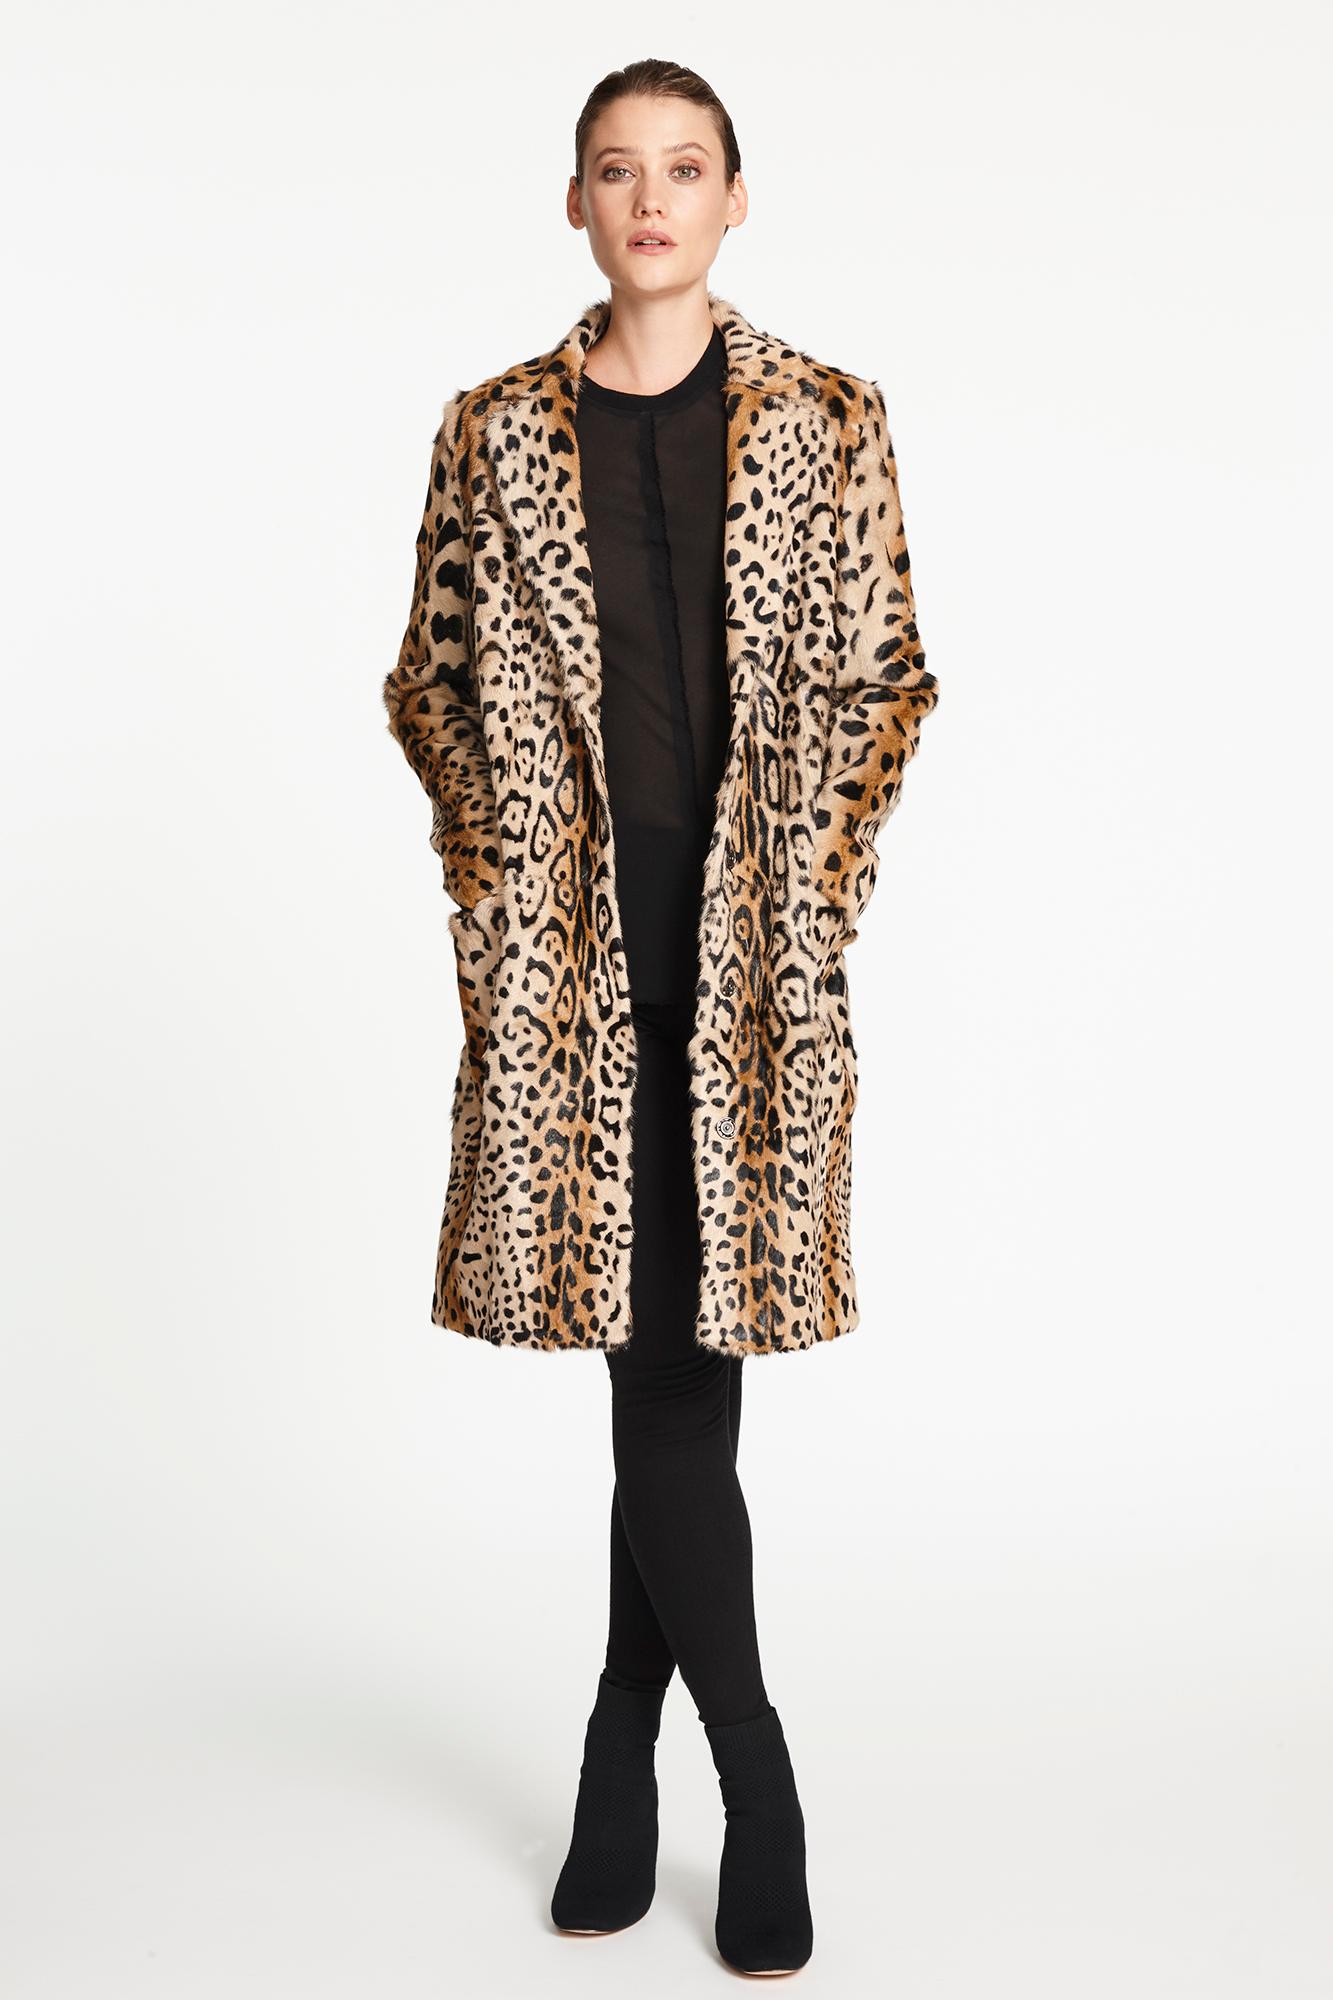 Women's Verheyen London Leopard Print Coat in Natural Goat Hair Fur UK 12 - Brand New